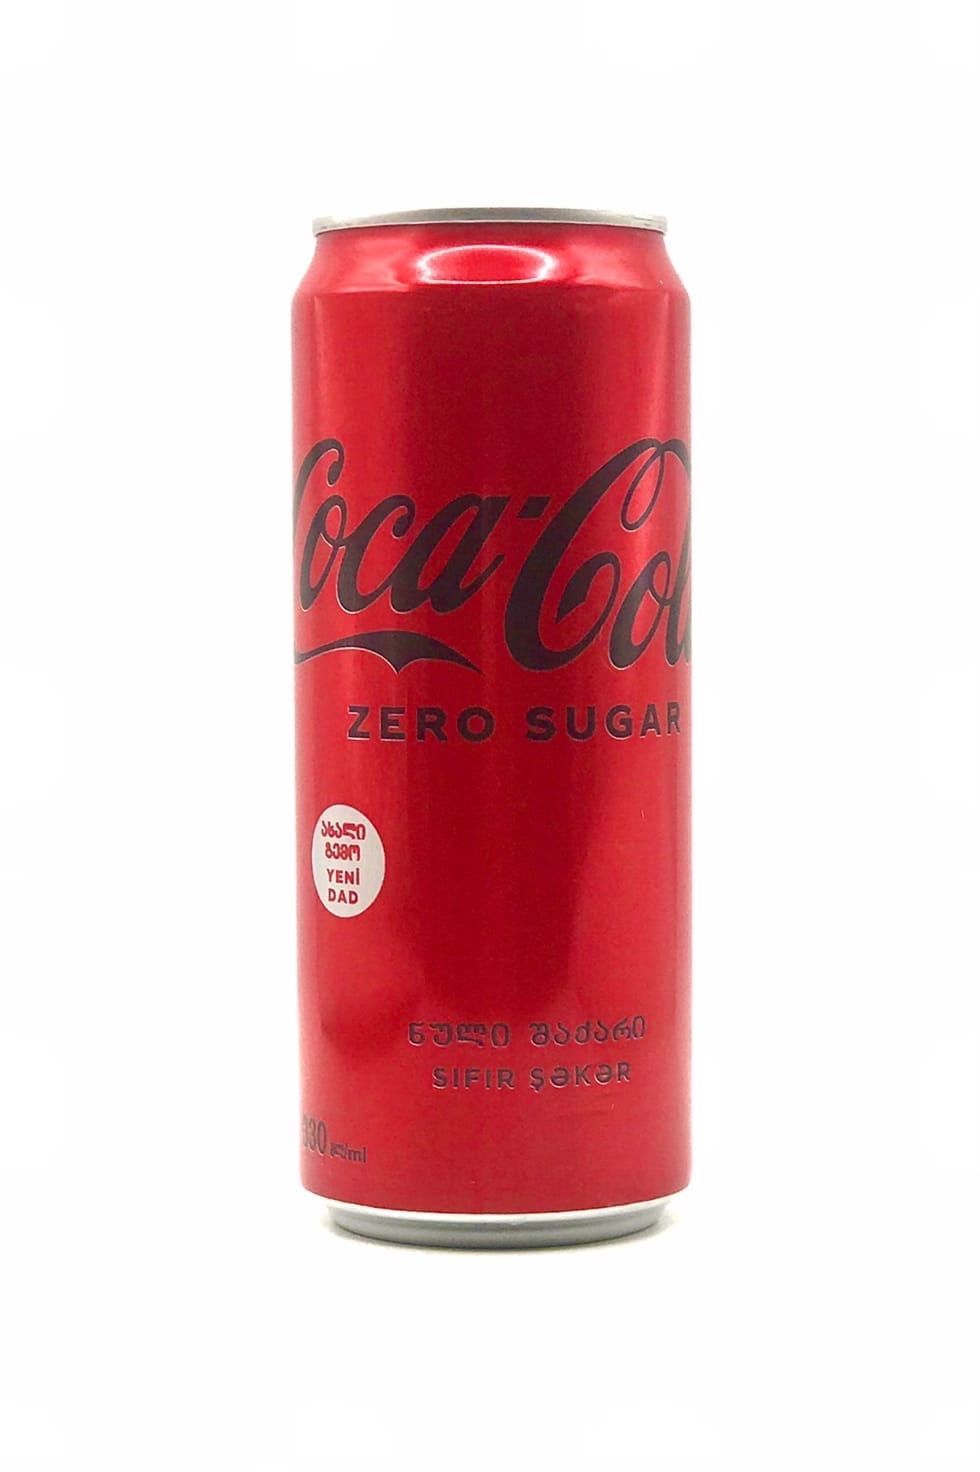 Coca Cola Azerbaijan. Напитки Азербайджан напитки напитки. Фанта 300 мл жб Афганистан. Напиток "Coca-Cola" Zero Sugar п\б 1.75л, , шт.